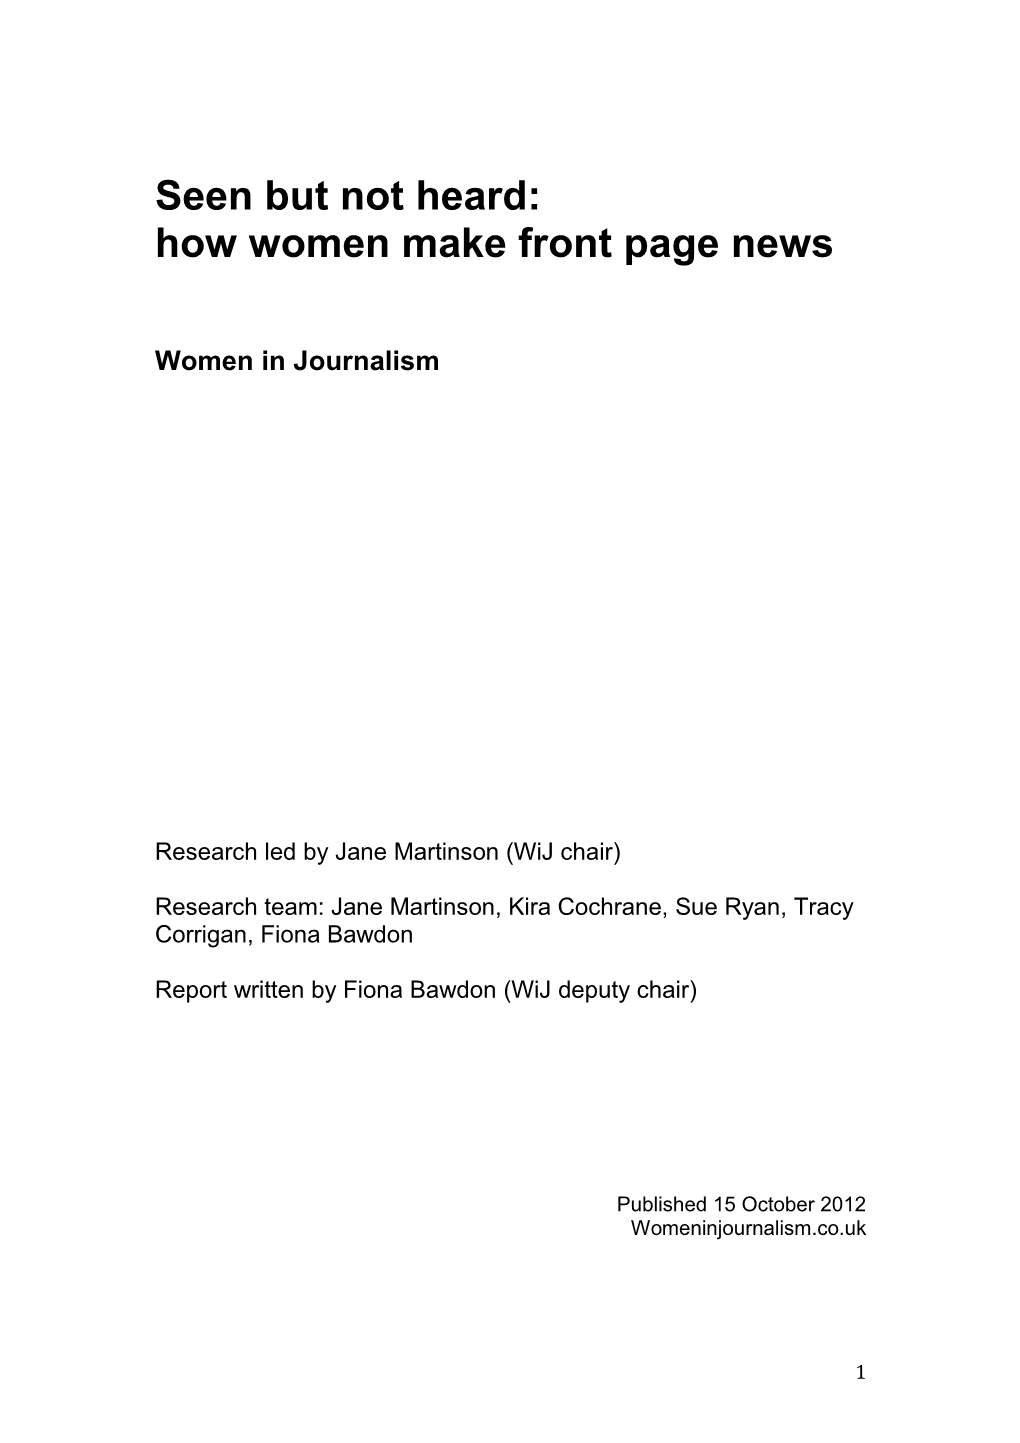 Seen but Not Heard: How Women Make Front Page News